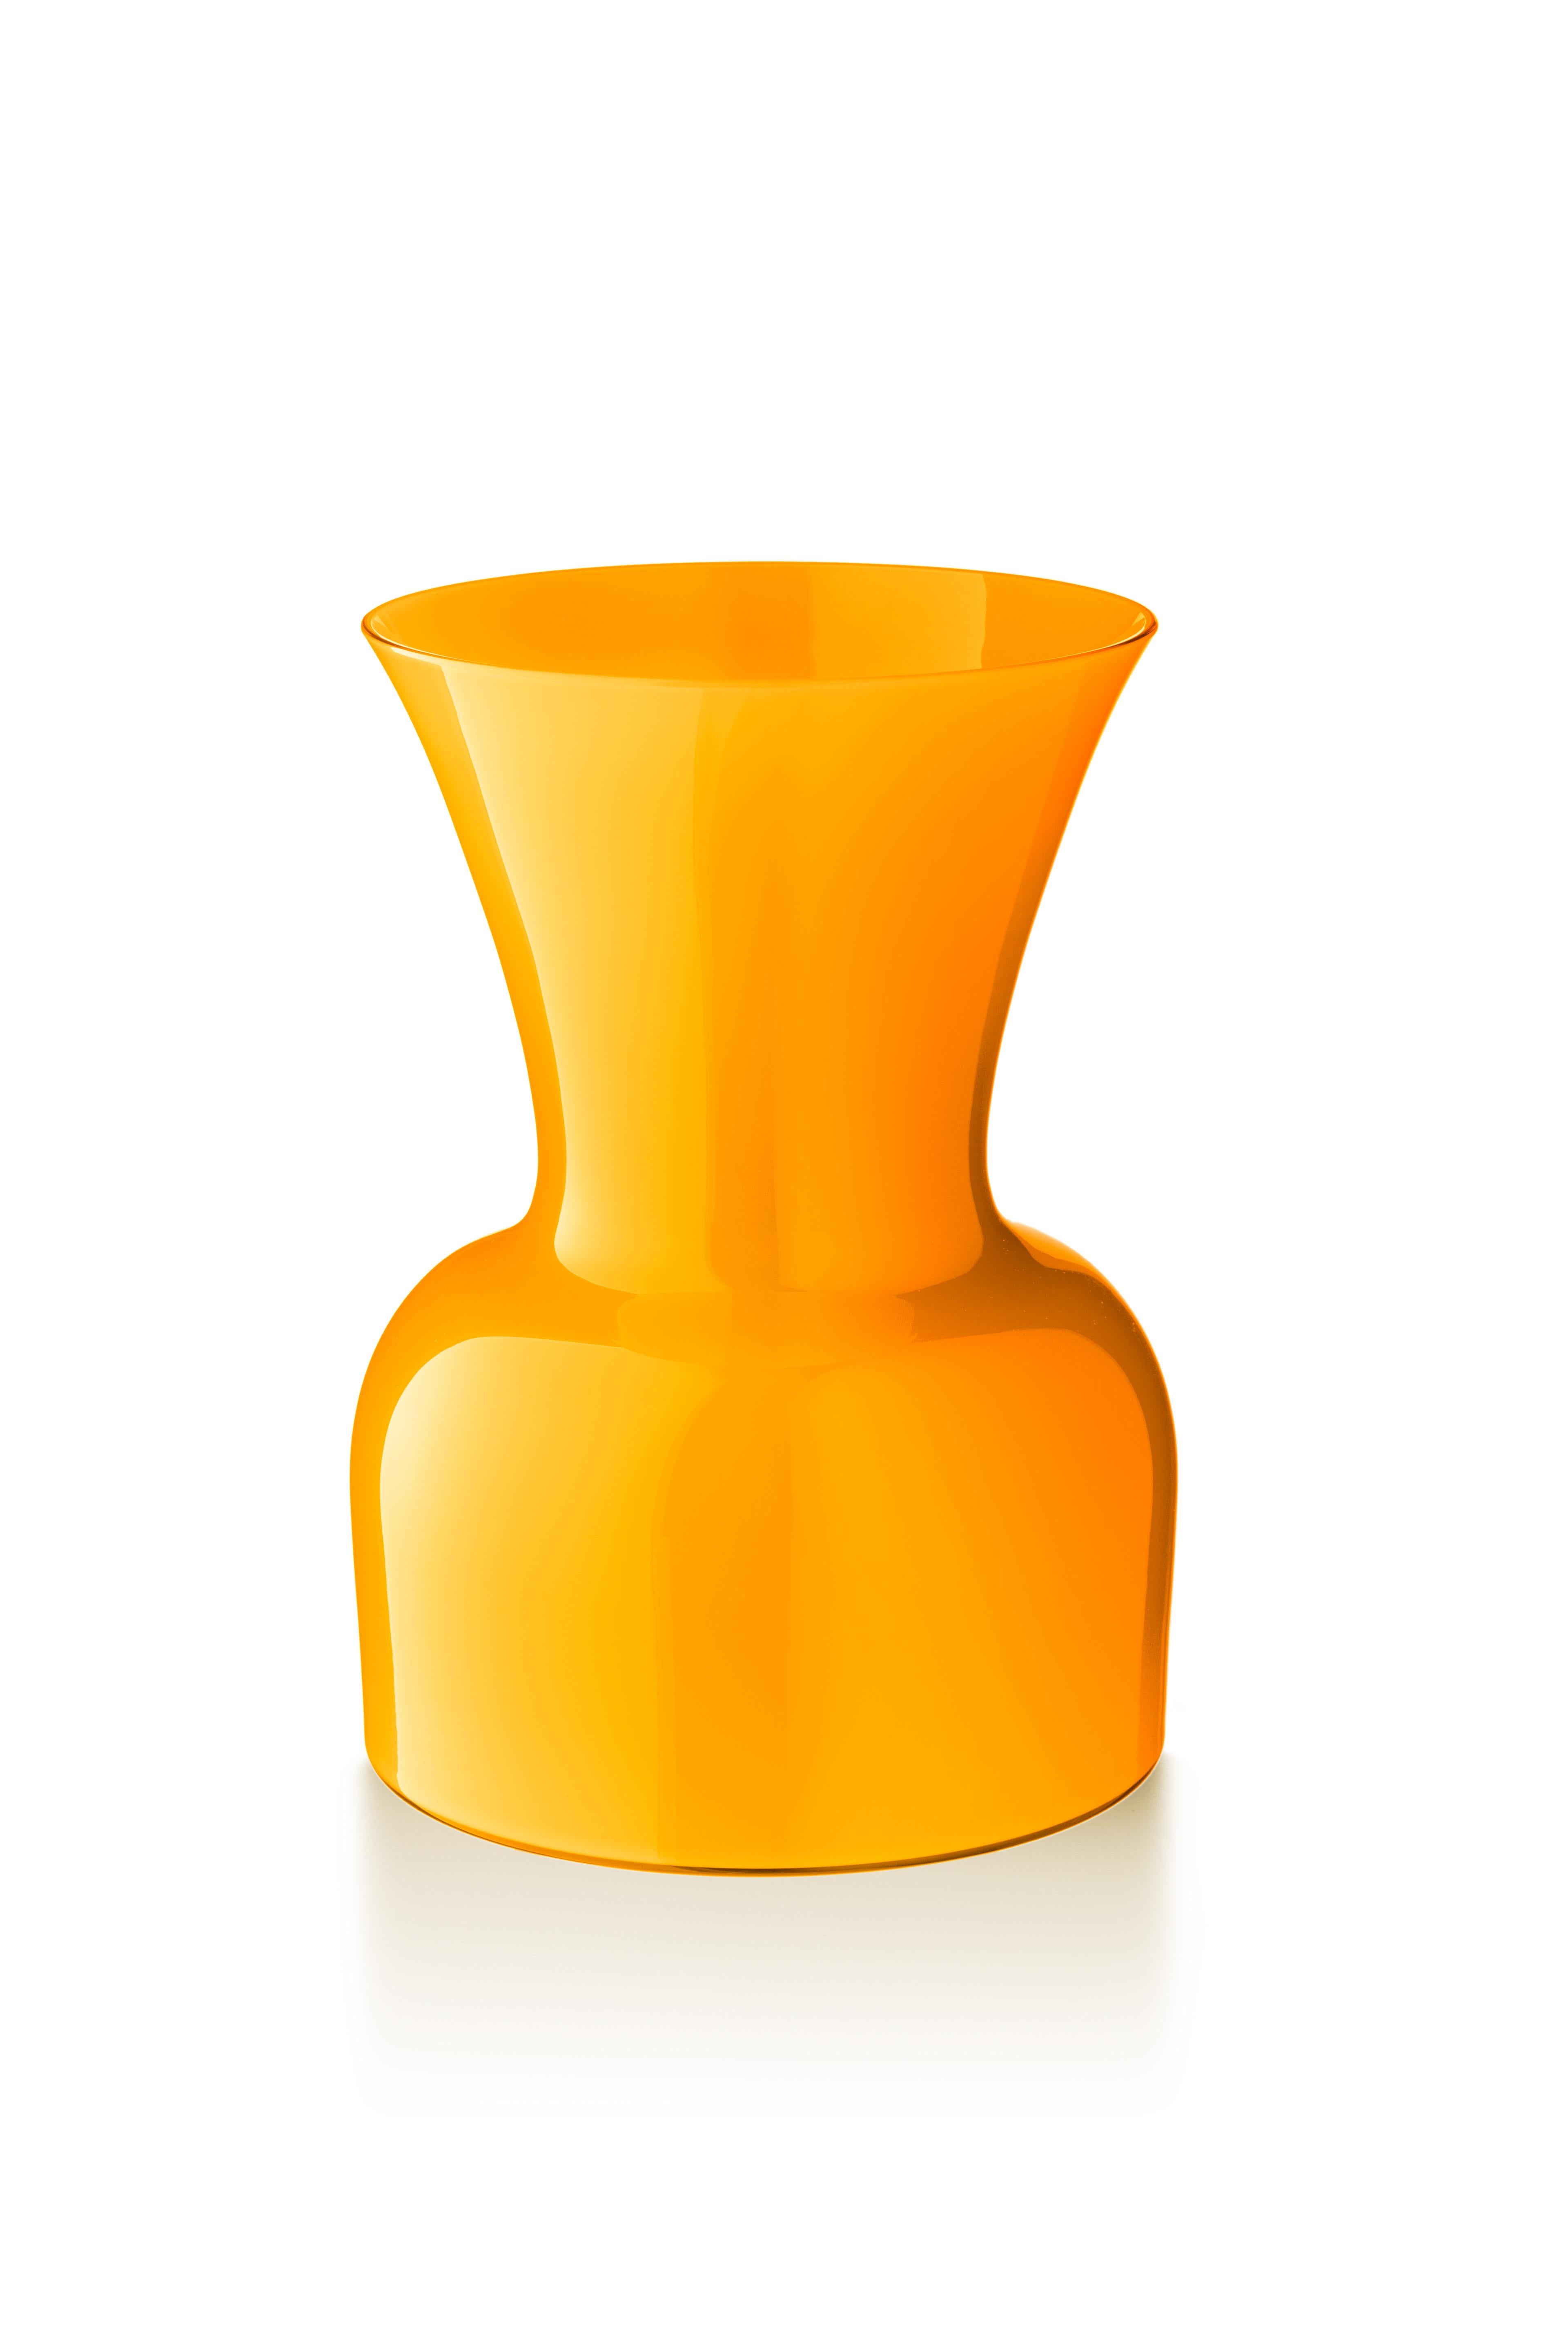 Yellow (10042) Large Profili Daisy Murano Glass Vase by Anna Gili